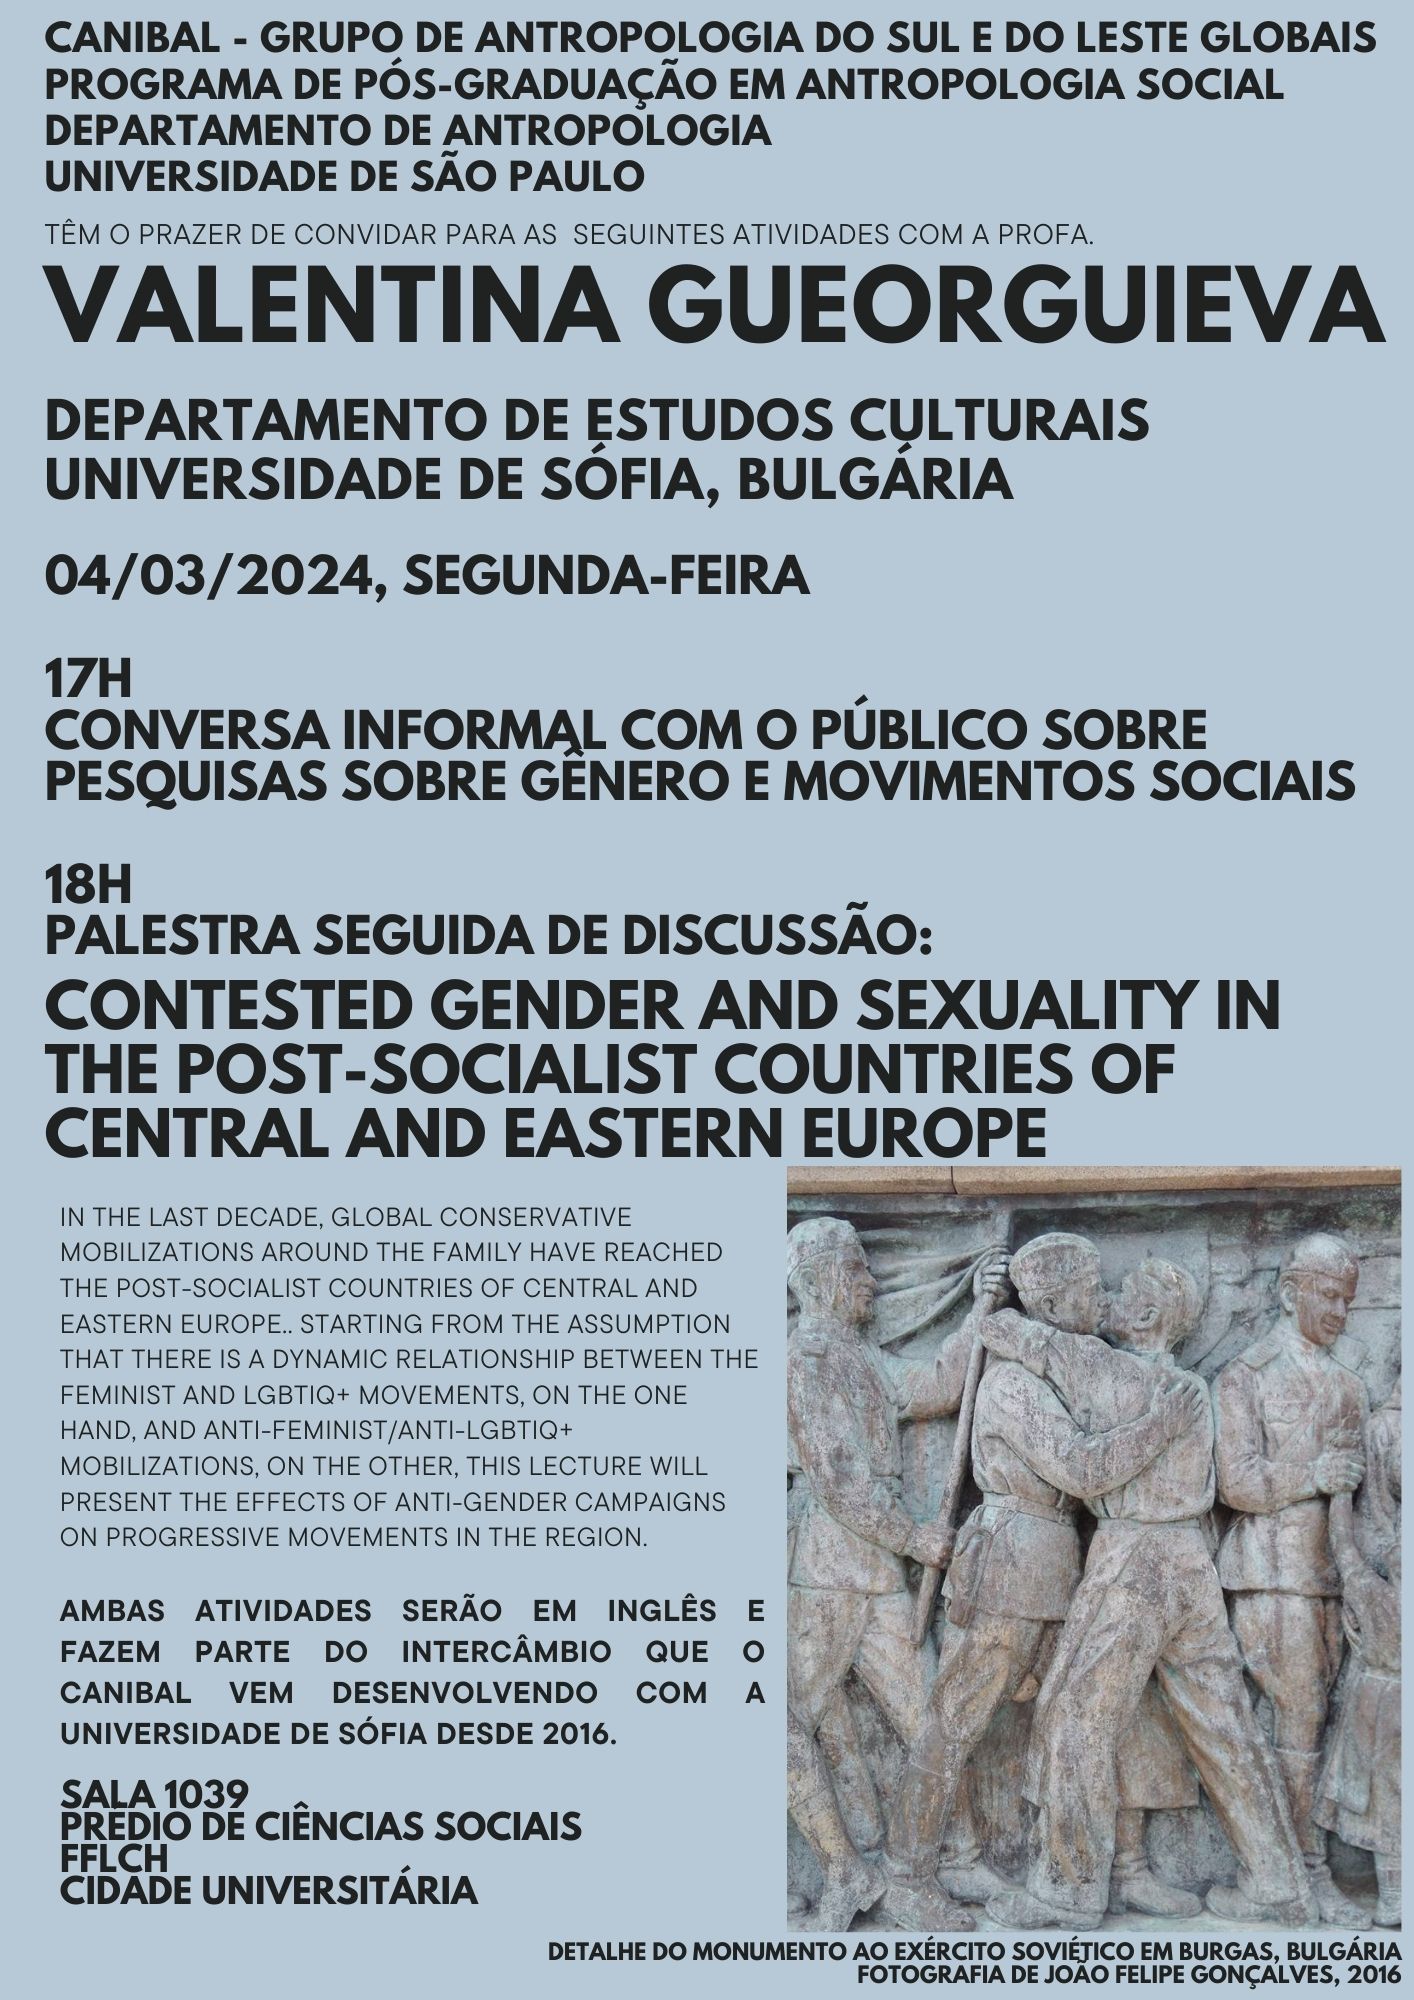 CANIBAL Study Group invites professor Valentina Gueorguieva (Sofia University, Bulgaria)